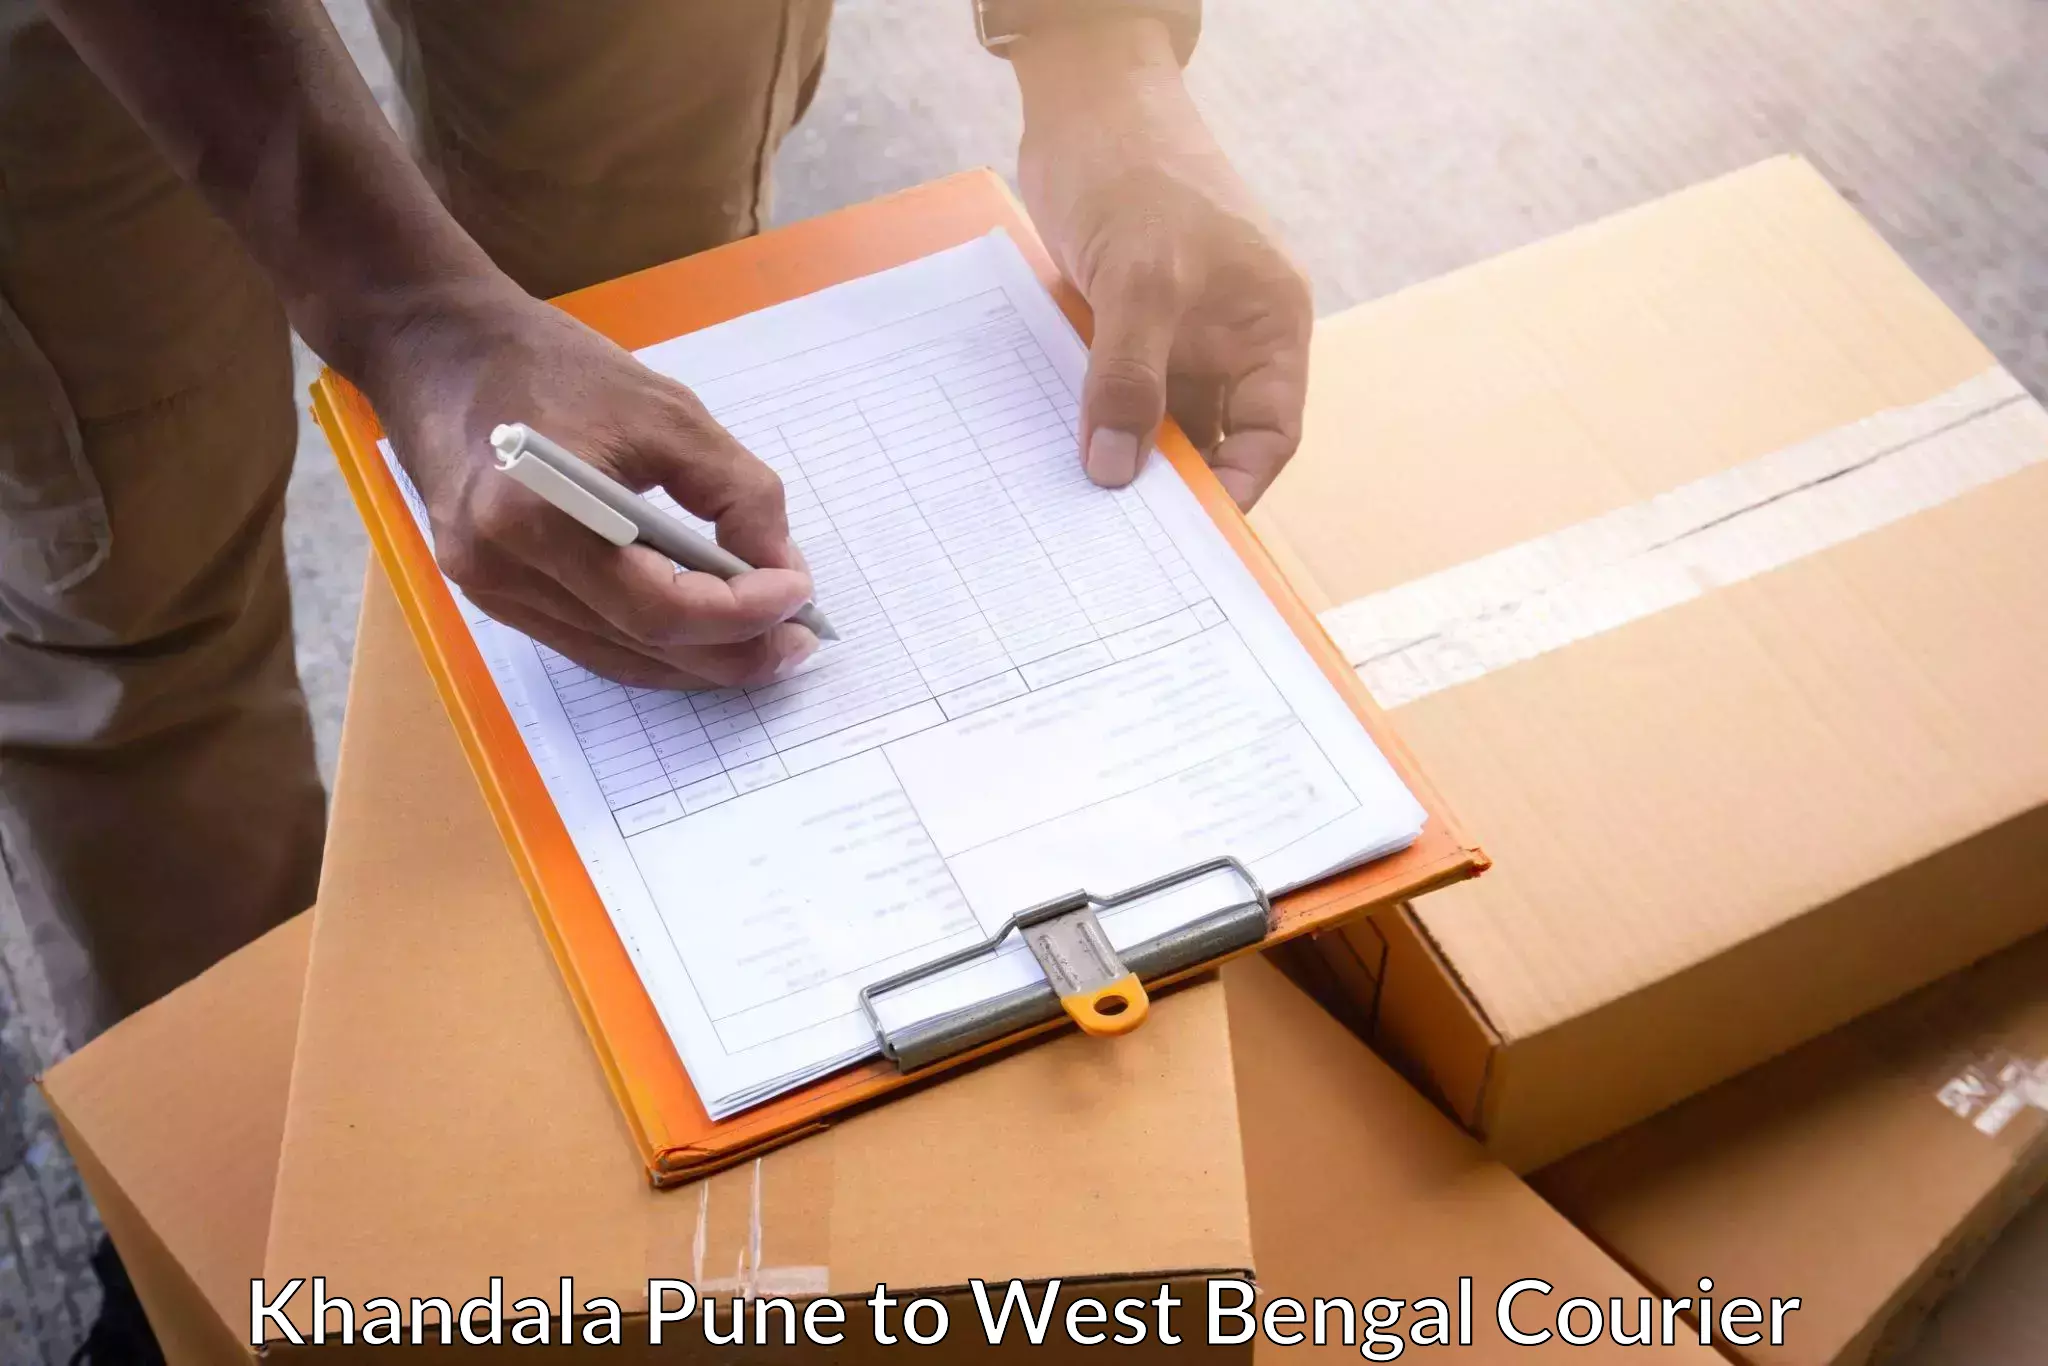 Efficient order fulfillment Khandala Pune to West Bengal